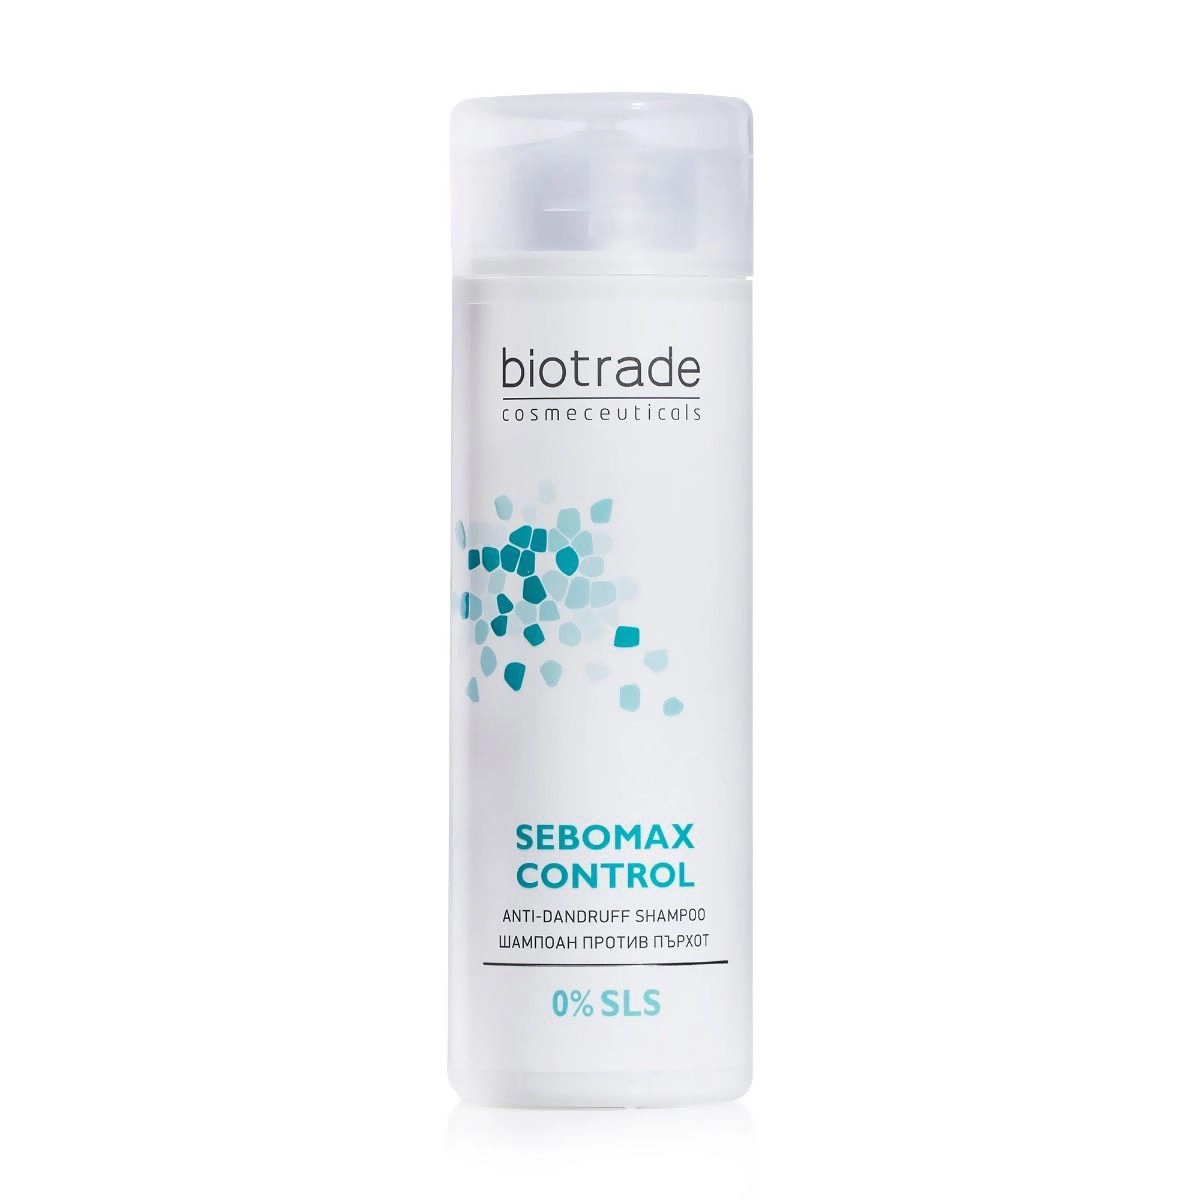 Безсульфатный шампунь против перхоти для всех типов волос - Biotrade Sebomax Control Anti-Dandruff Shampoo, 200 мл - фото N3